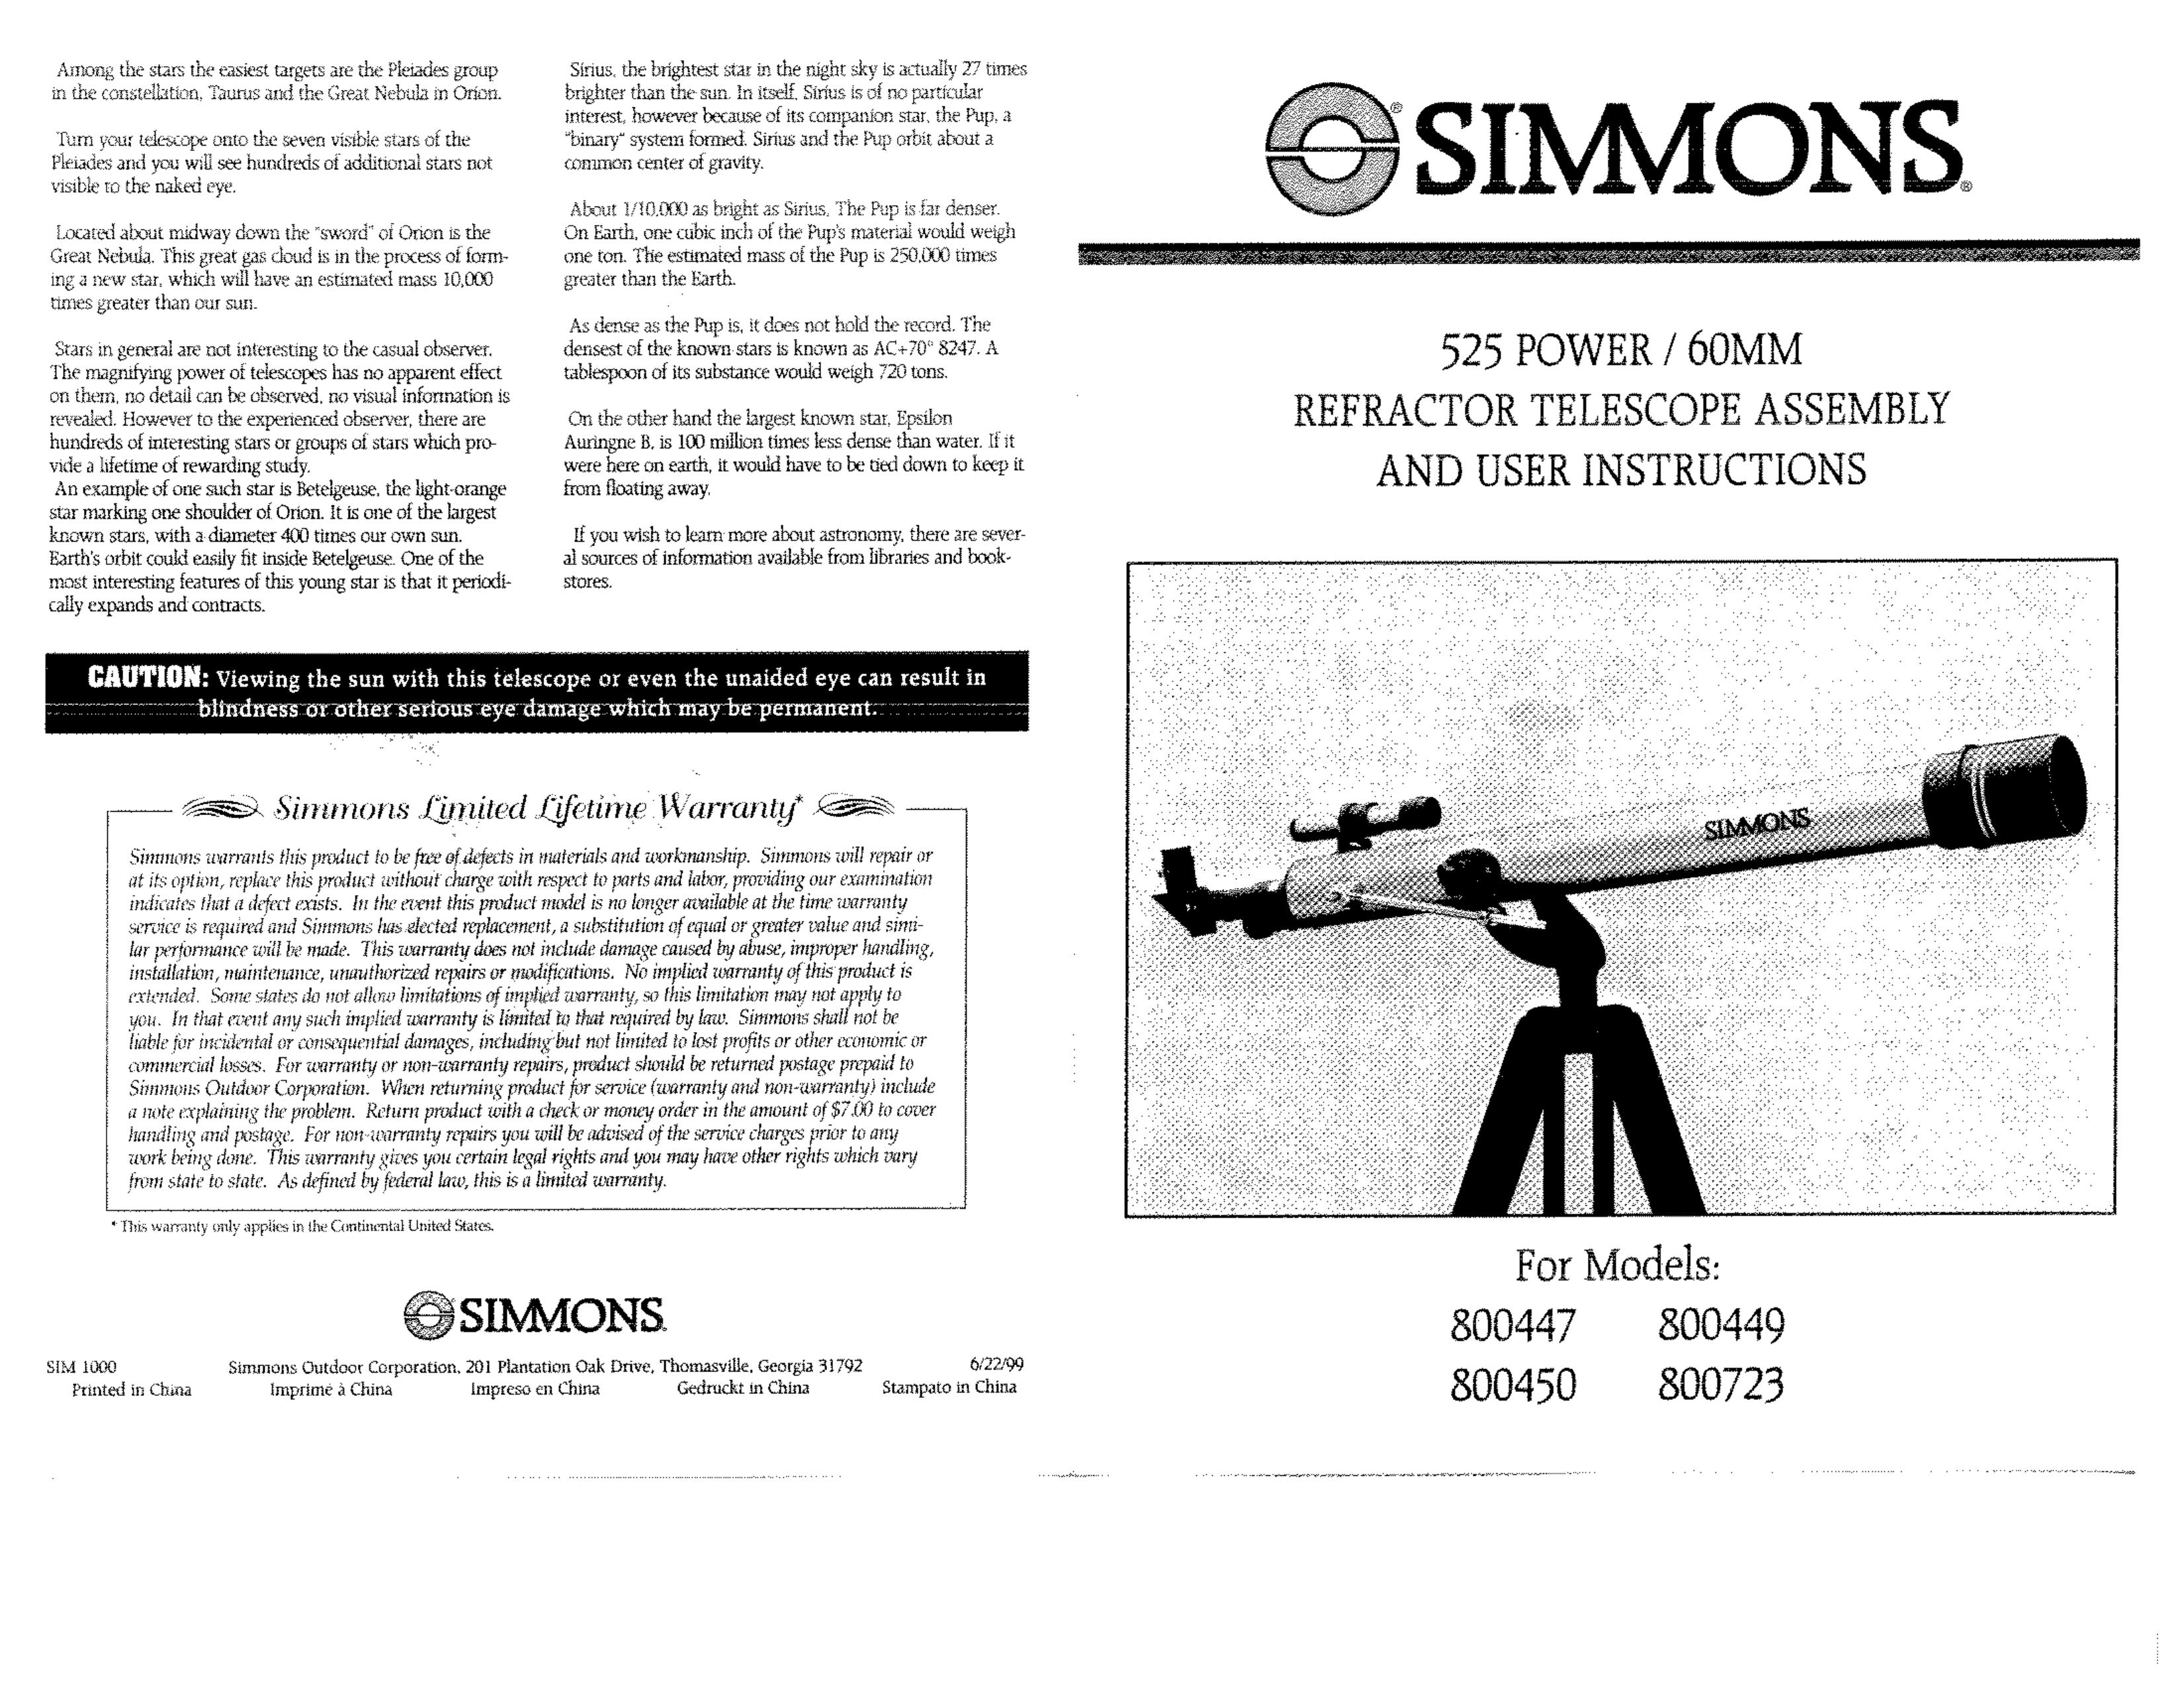 Simmons Optics 800447 Telescope User Manual